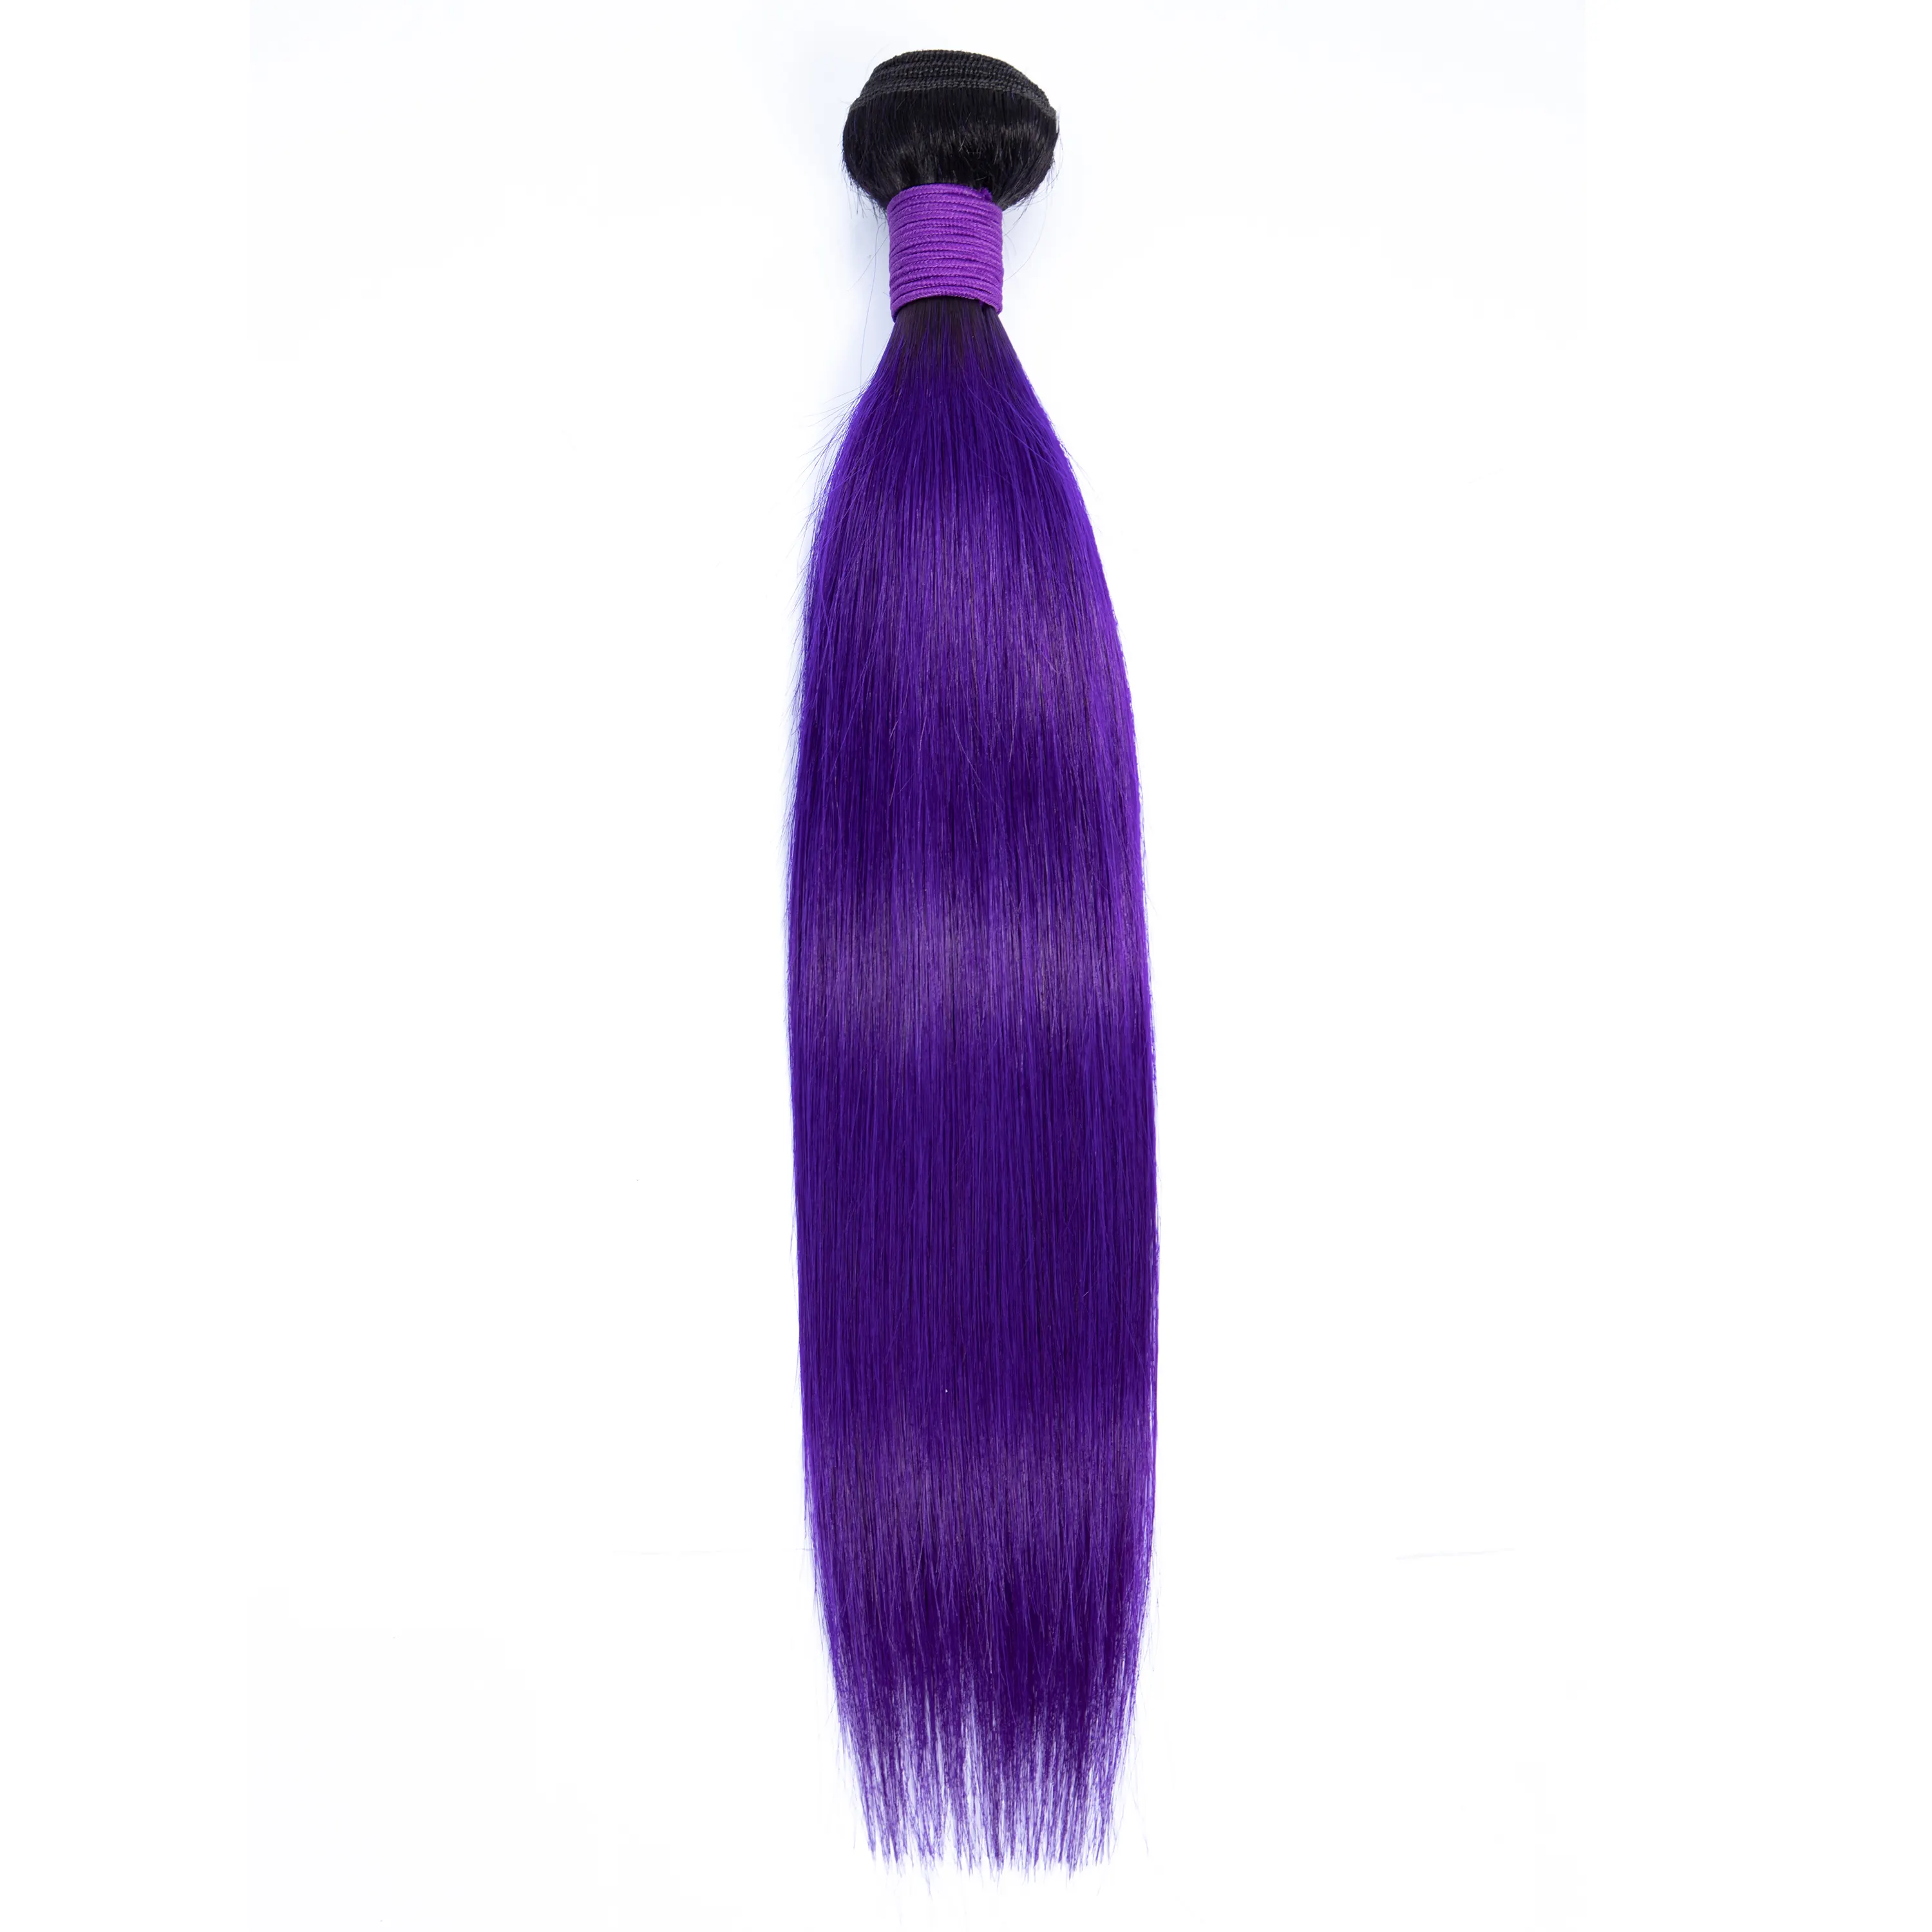 Sin procesar 10a natural brasileño sedoso recto onda estilos cabello humano tejido púrpura Remy 1B púrpura mezcla de paquetes de colores combre